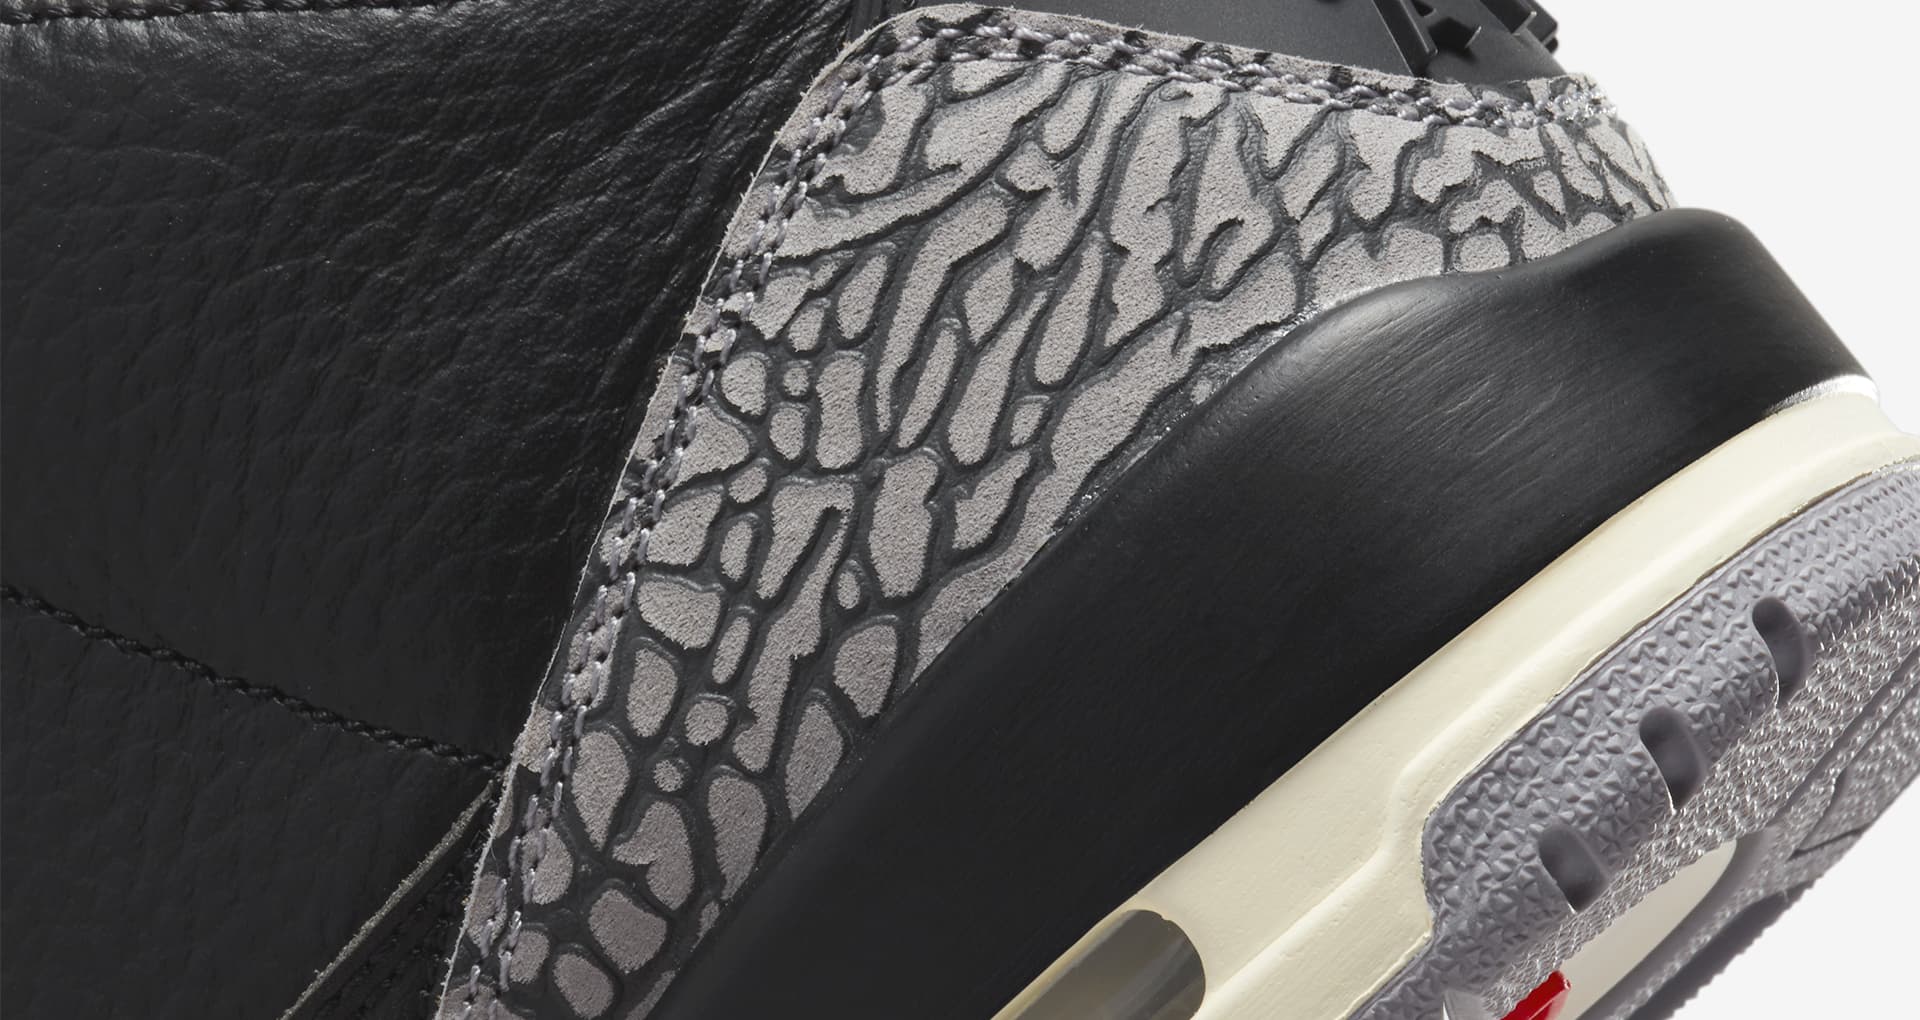 Women's Air Jordan 3 'Black Gold' (CK9246-067) Release Date. Nike SNKRS IN